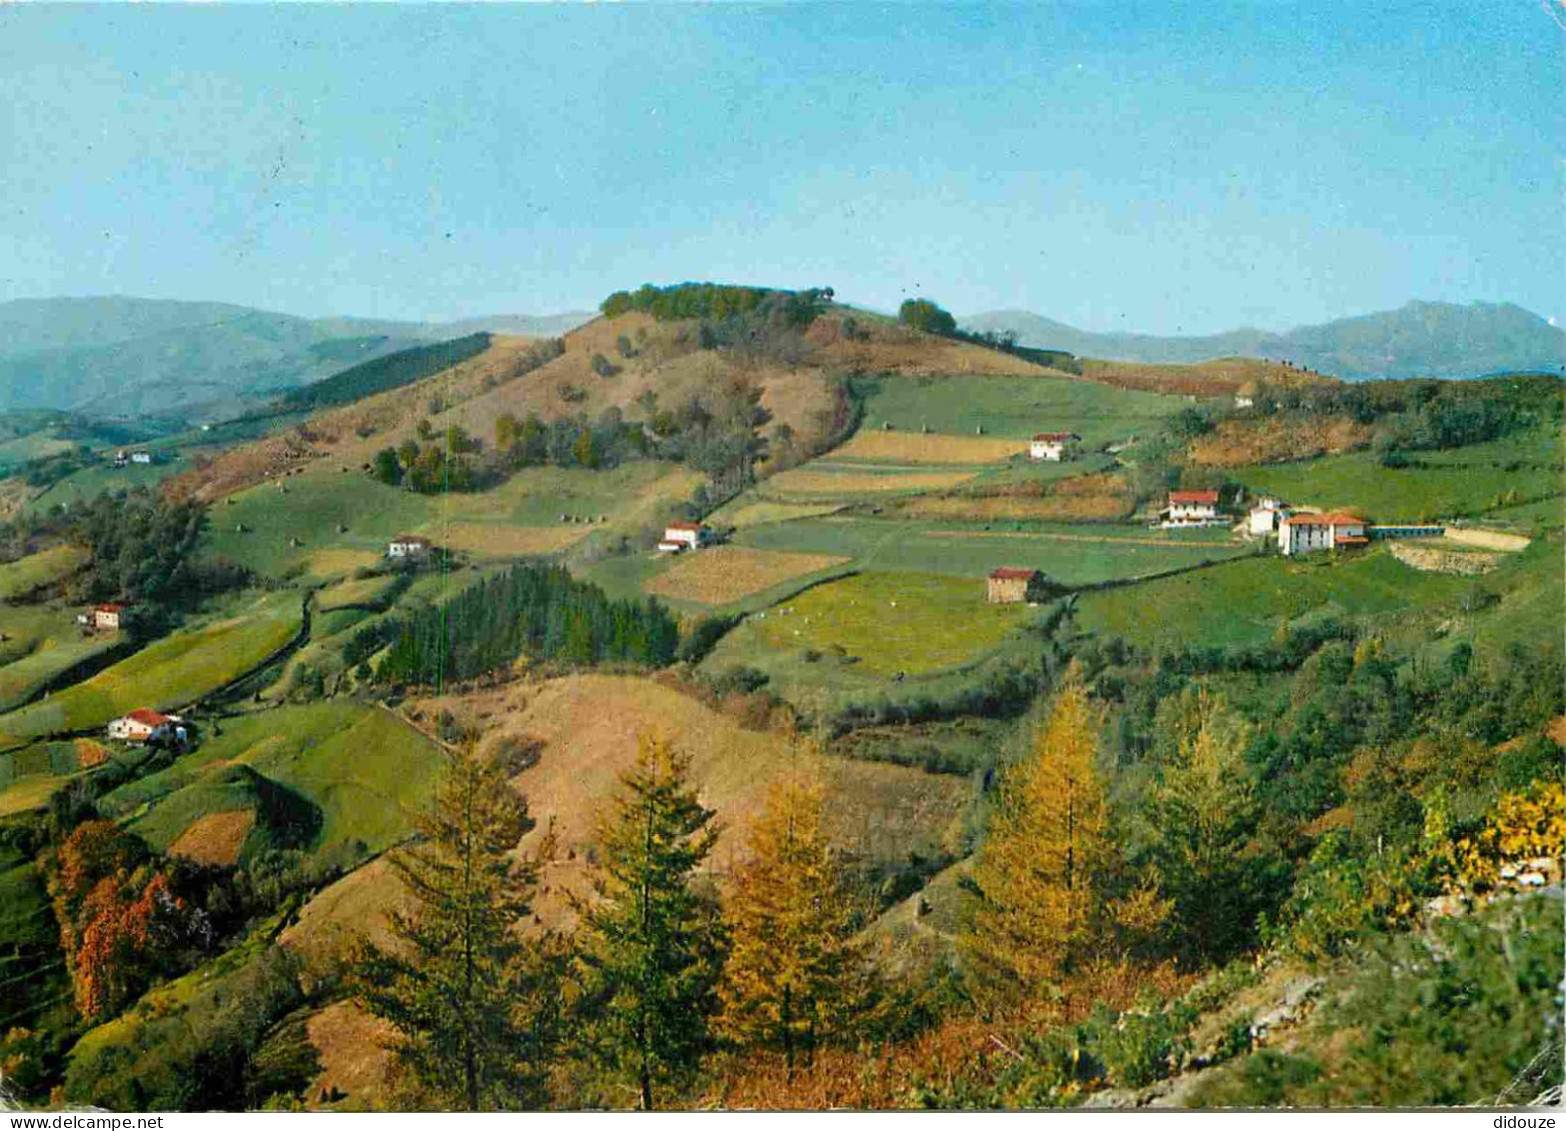 Espagne - Espana - Navarra - Echalar - Vista Panoramica Desde Palomeras - Vue Panoramique Des Palomeras - CPM - Voir Sca - Navarra (Pamplona)